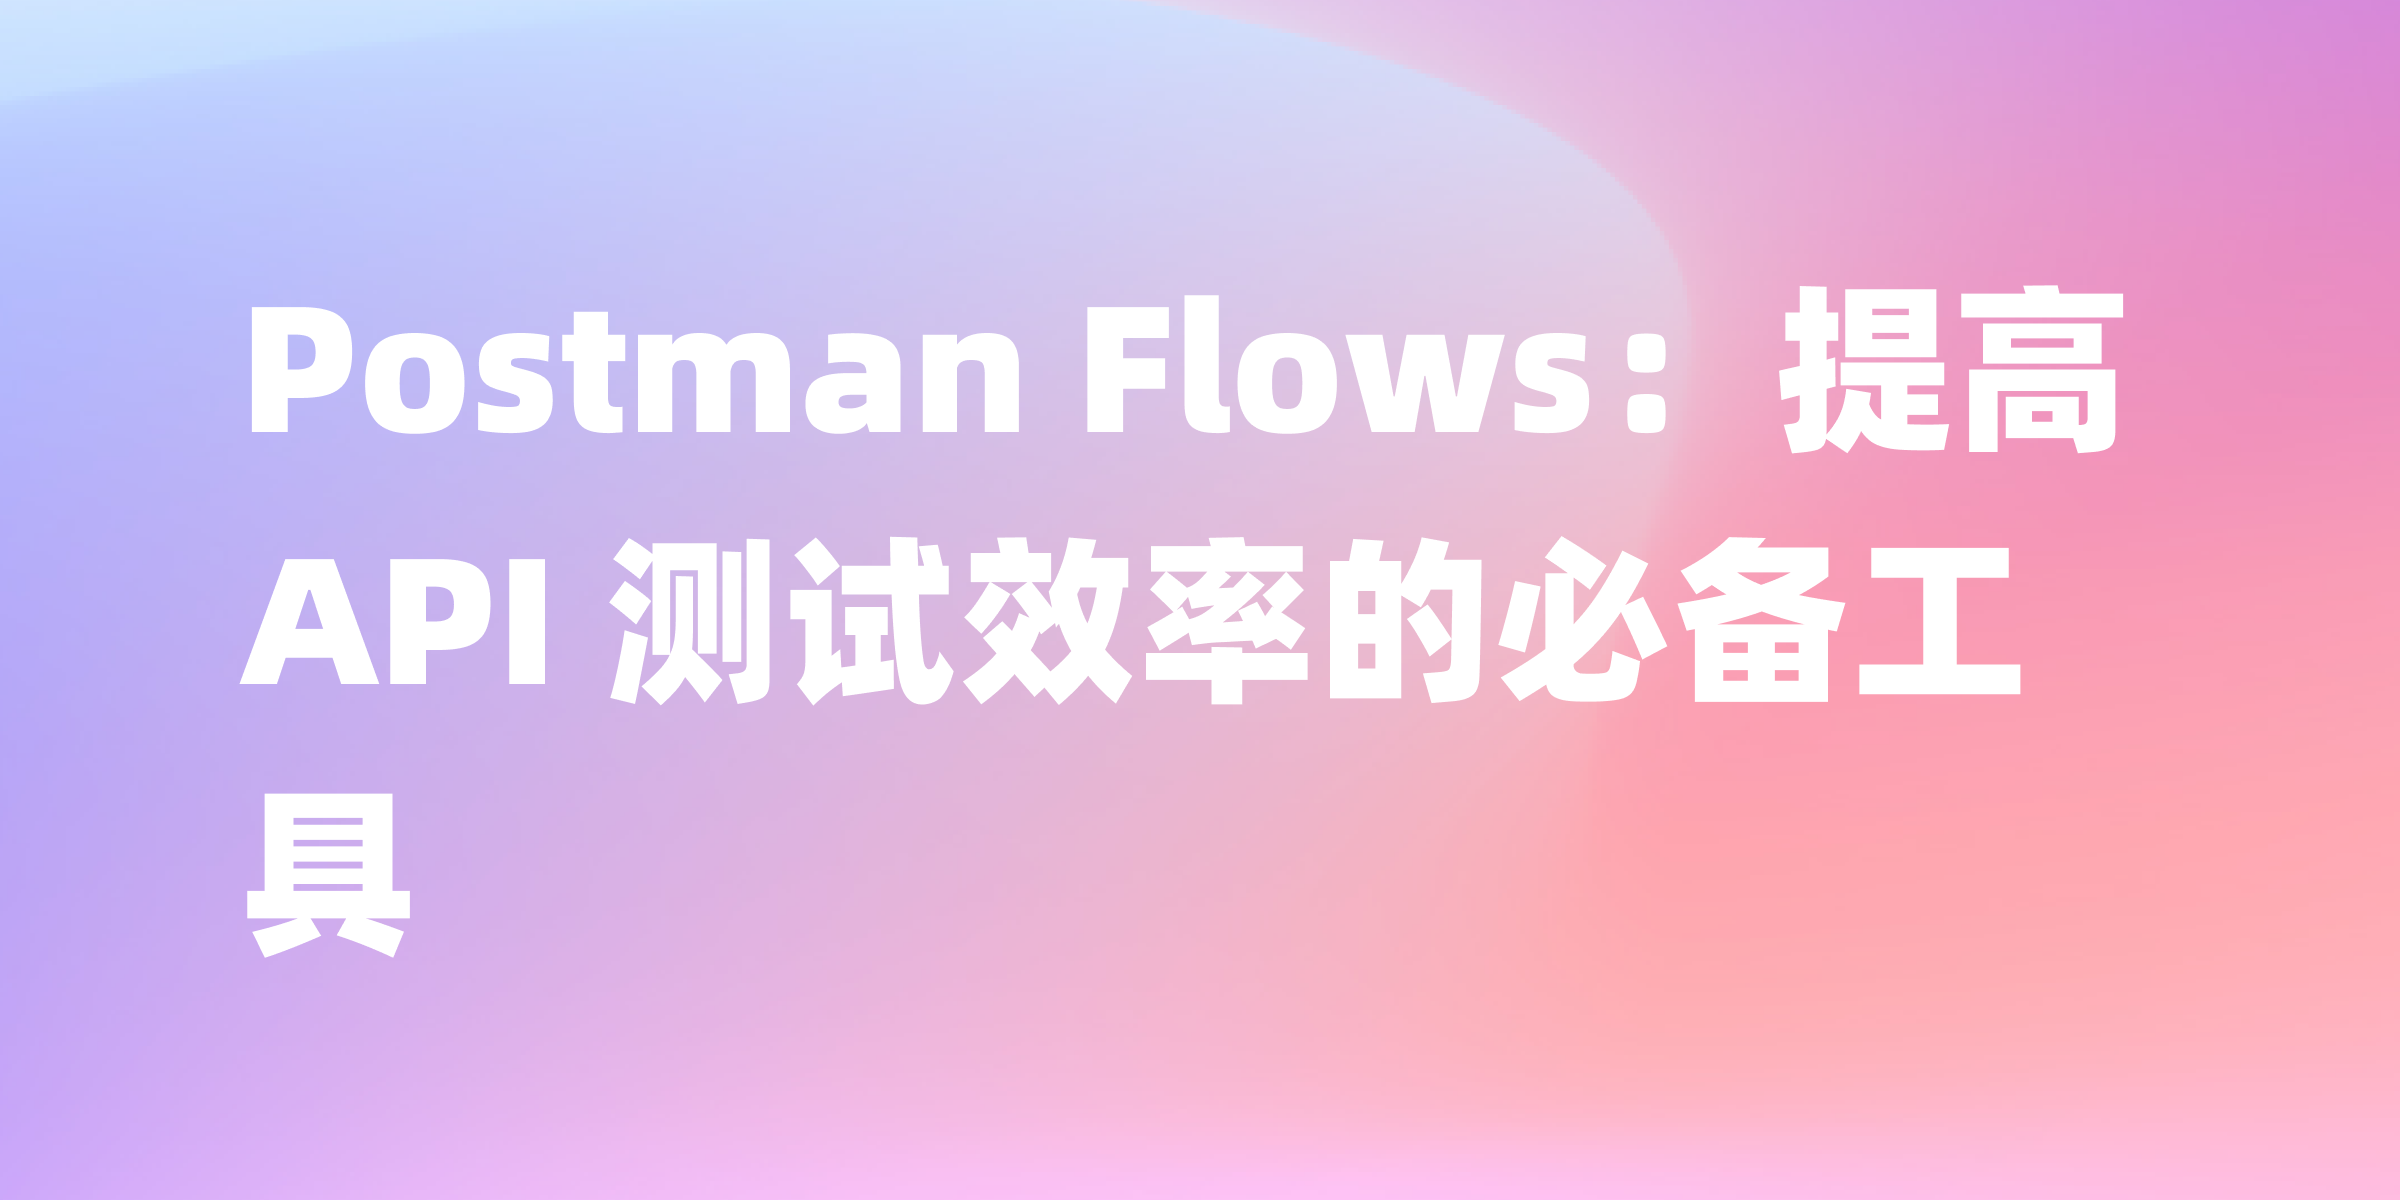 Postman Flows：简化 API 测试的工具